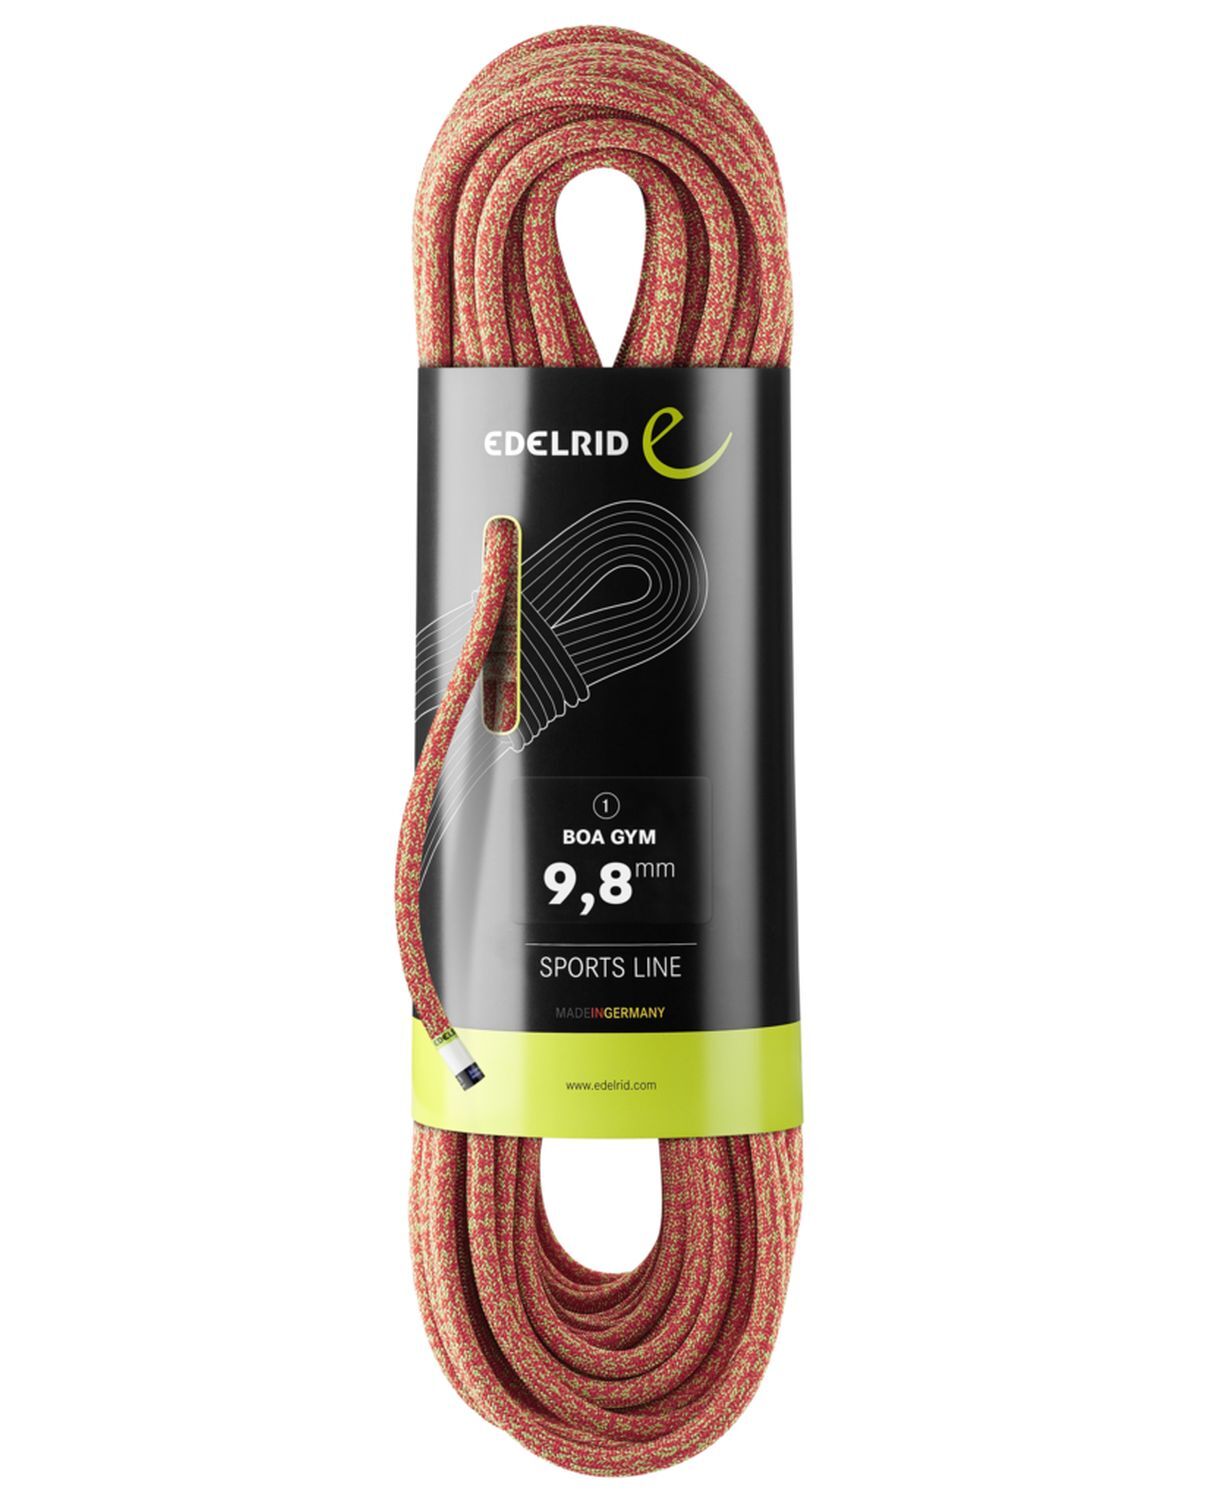 BOA GYM 9.8mm, indoor climbing rope